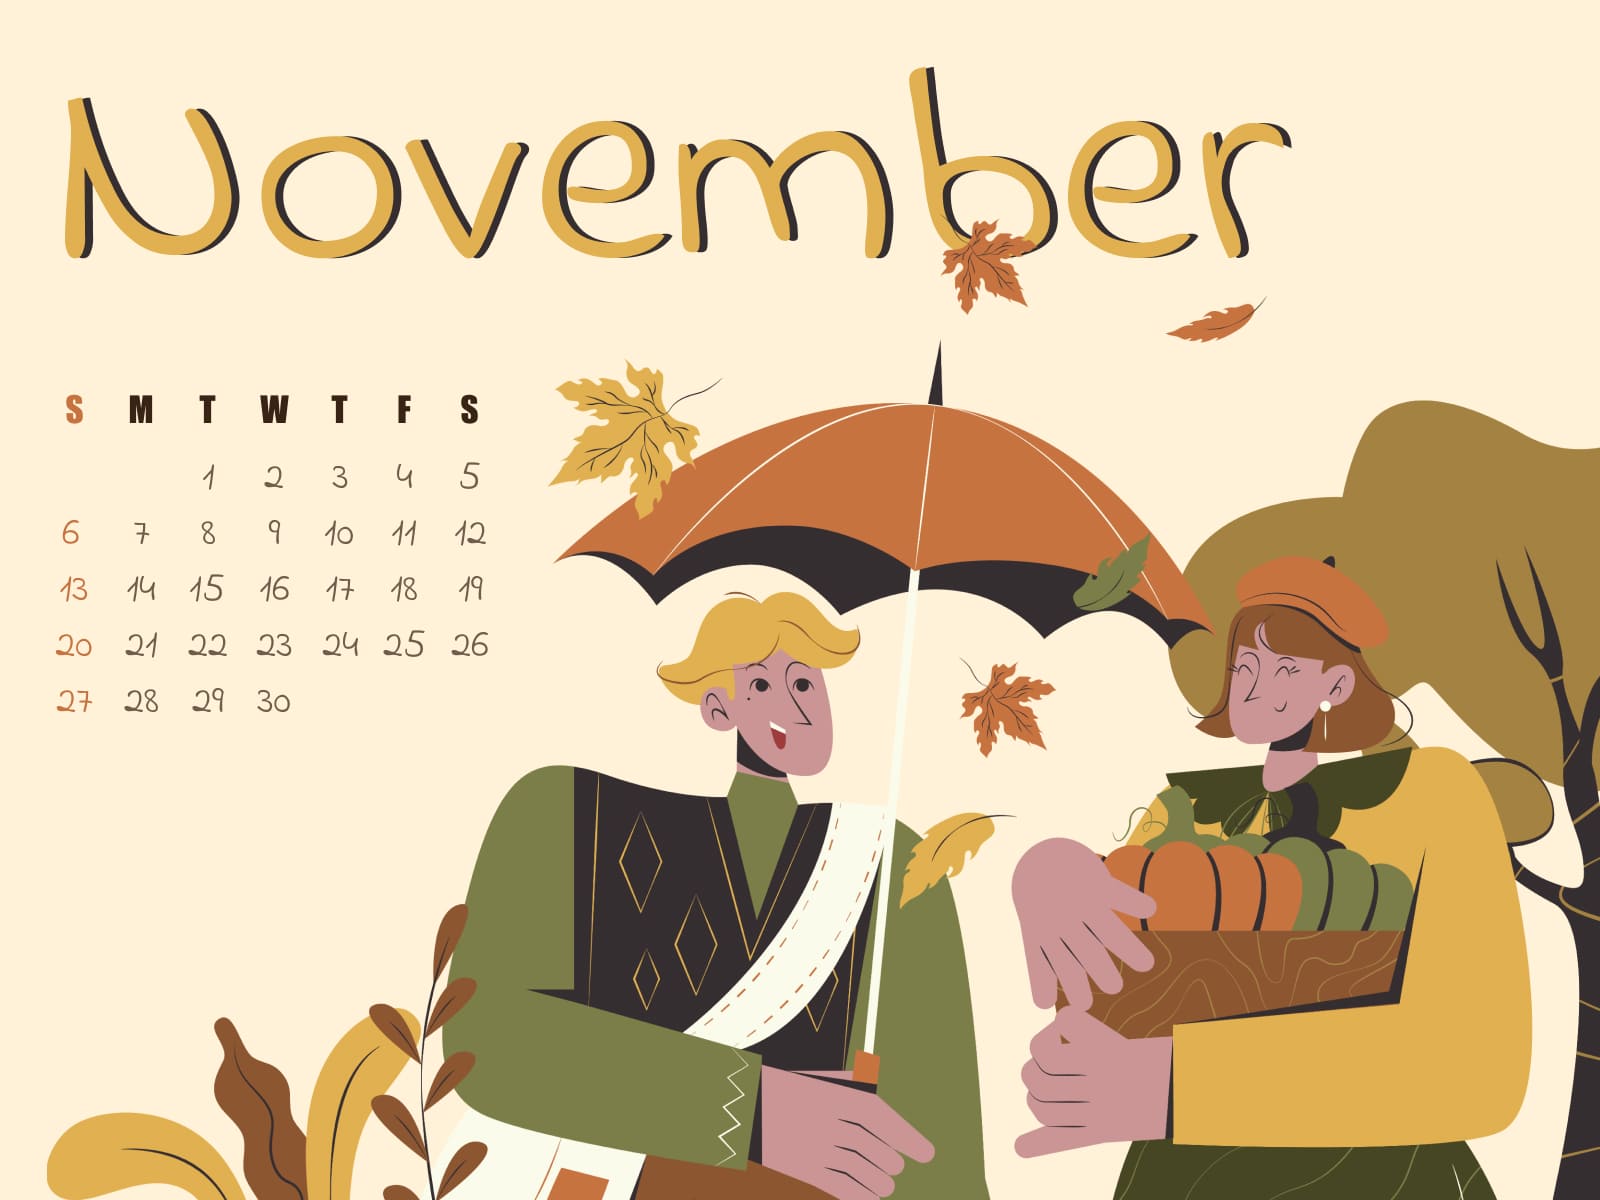 Free autumn November calendar, image size 1600x1200.